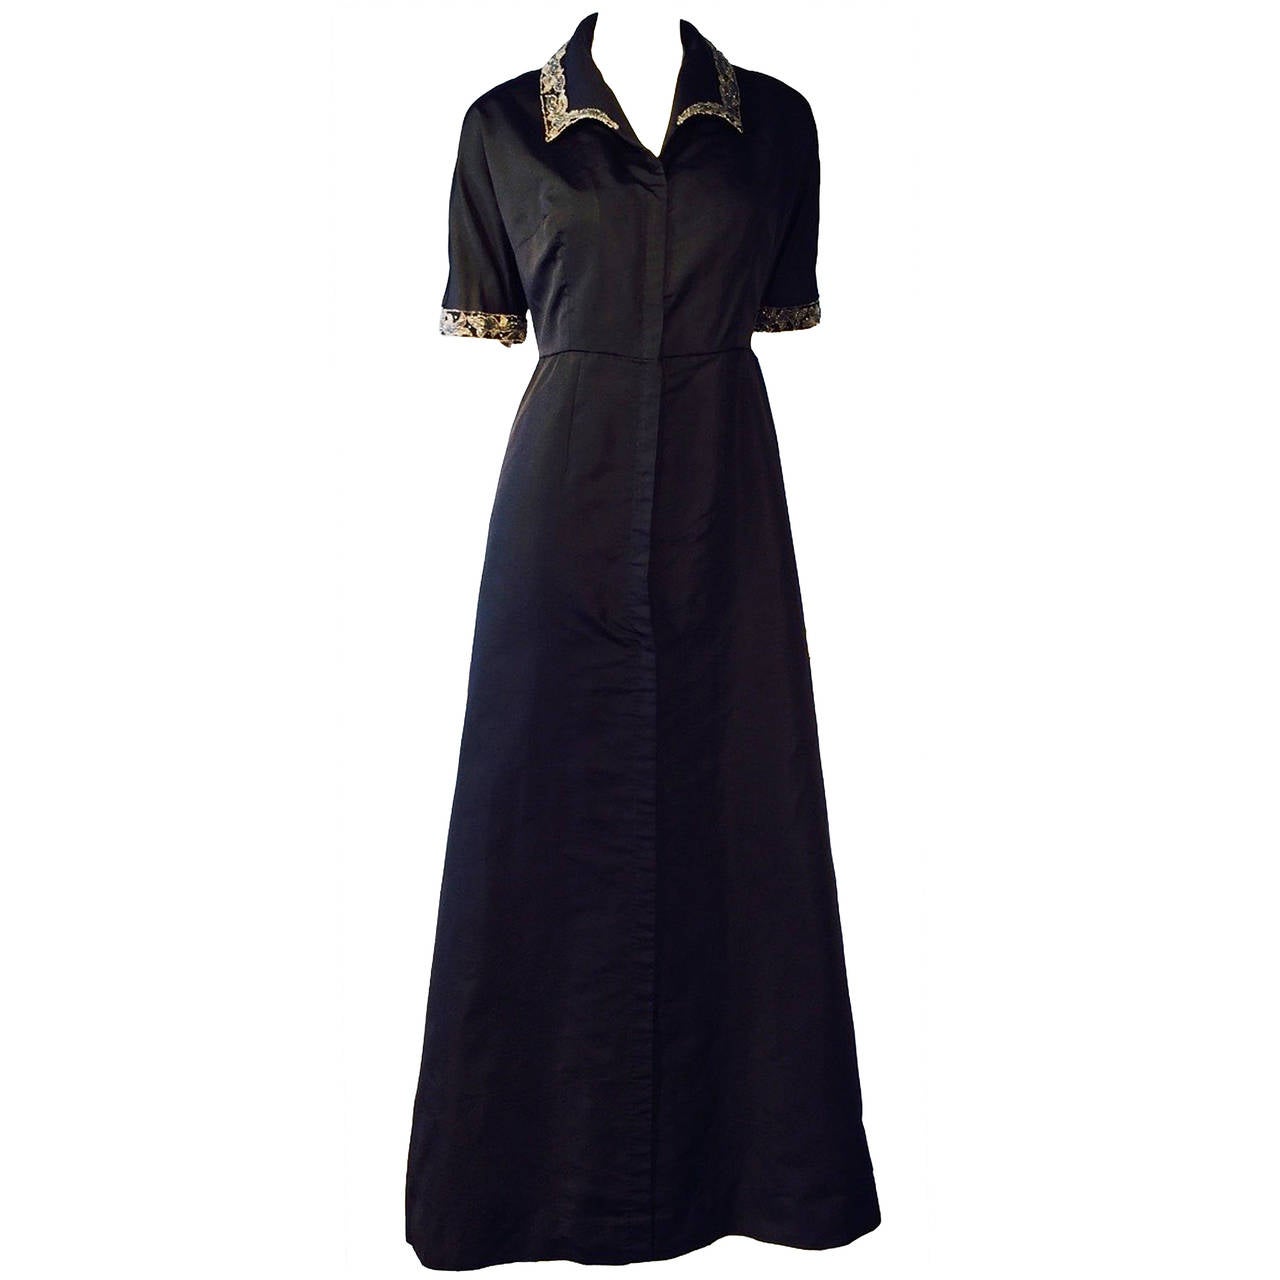 Elsa Schiaparelli Haute Couture Gown 1930s